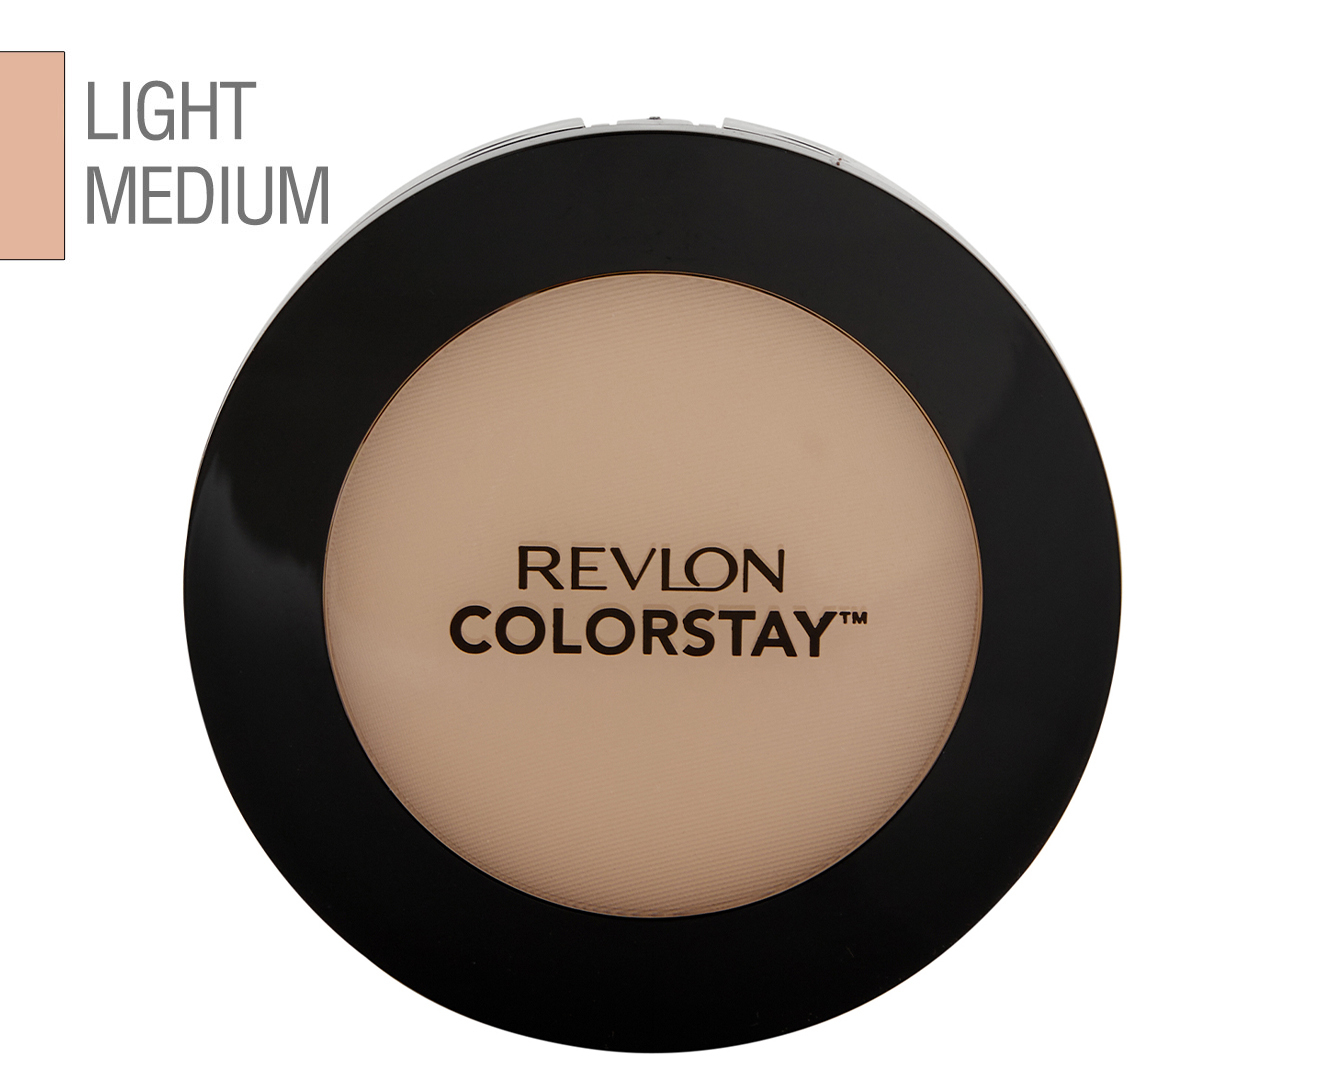 Revlon ColorStay Pressed Powder 8.4g - #830 Light/Medium | Catch.co.nz